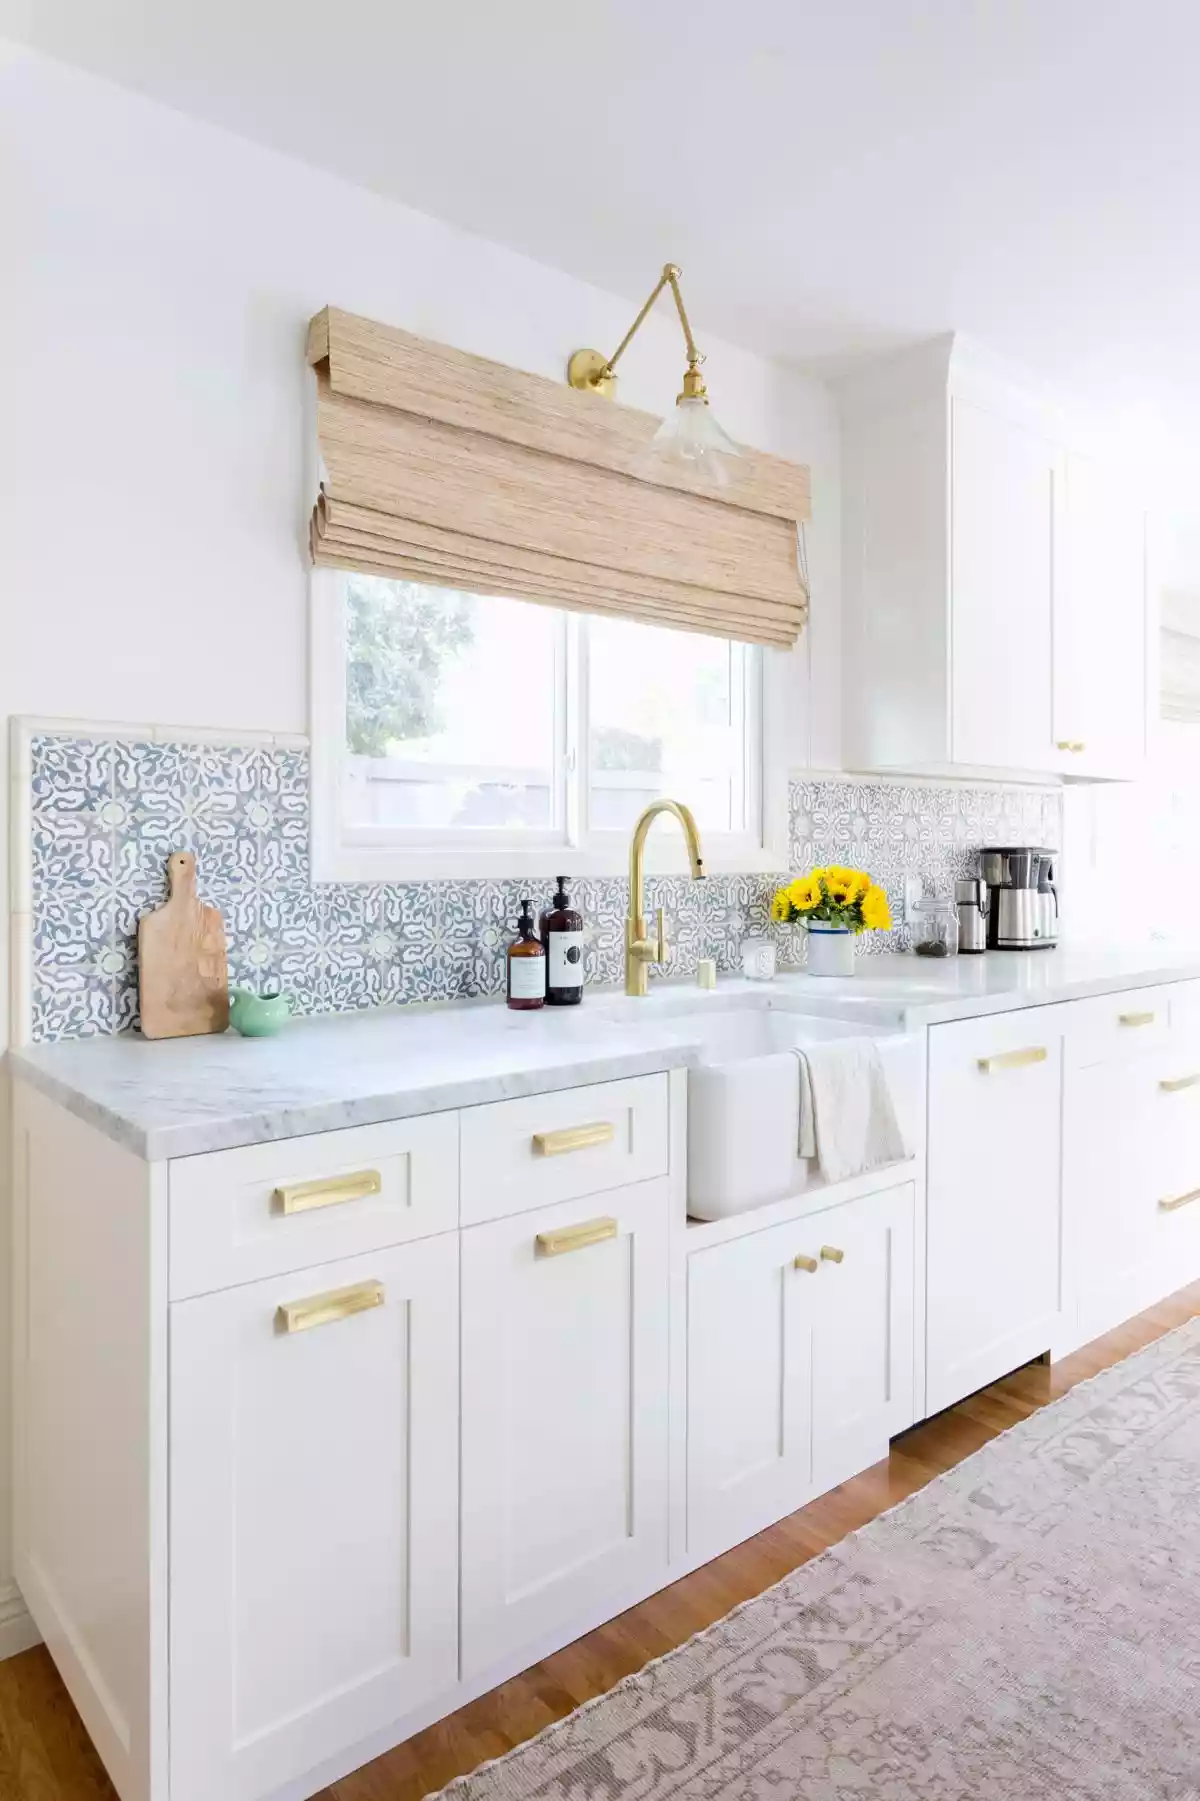 Carrara marble kitchen countertops and decorative backsplash